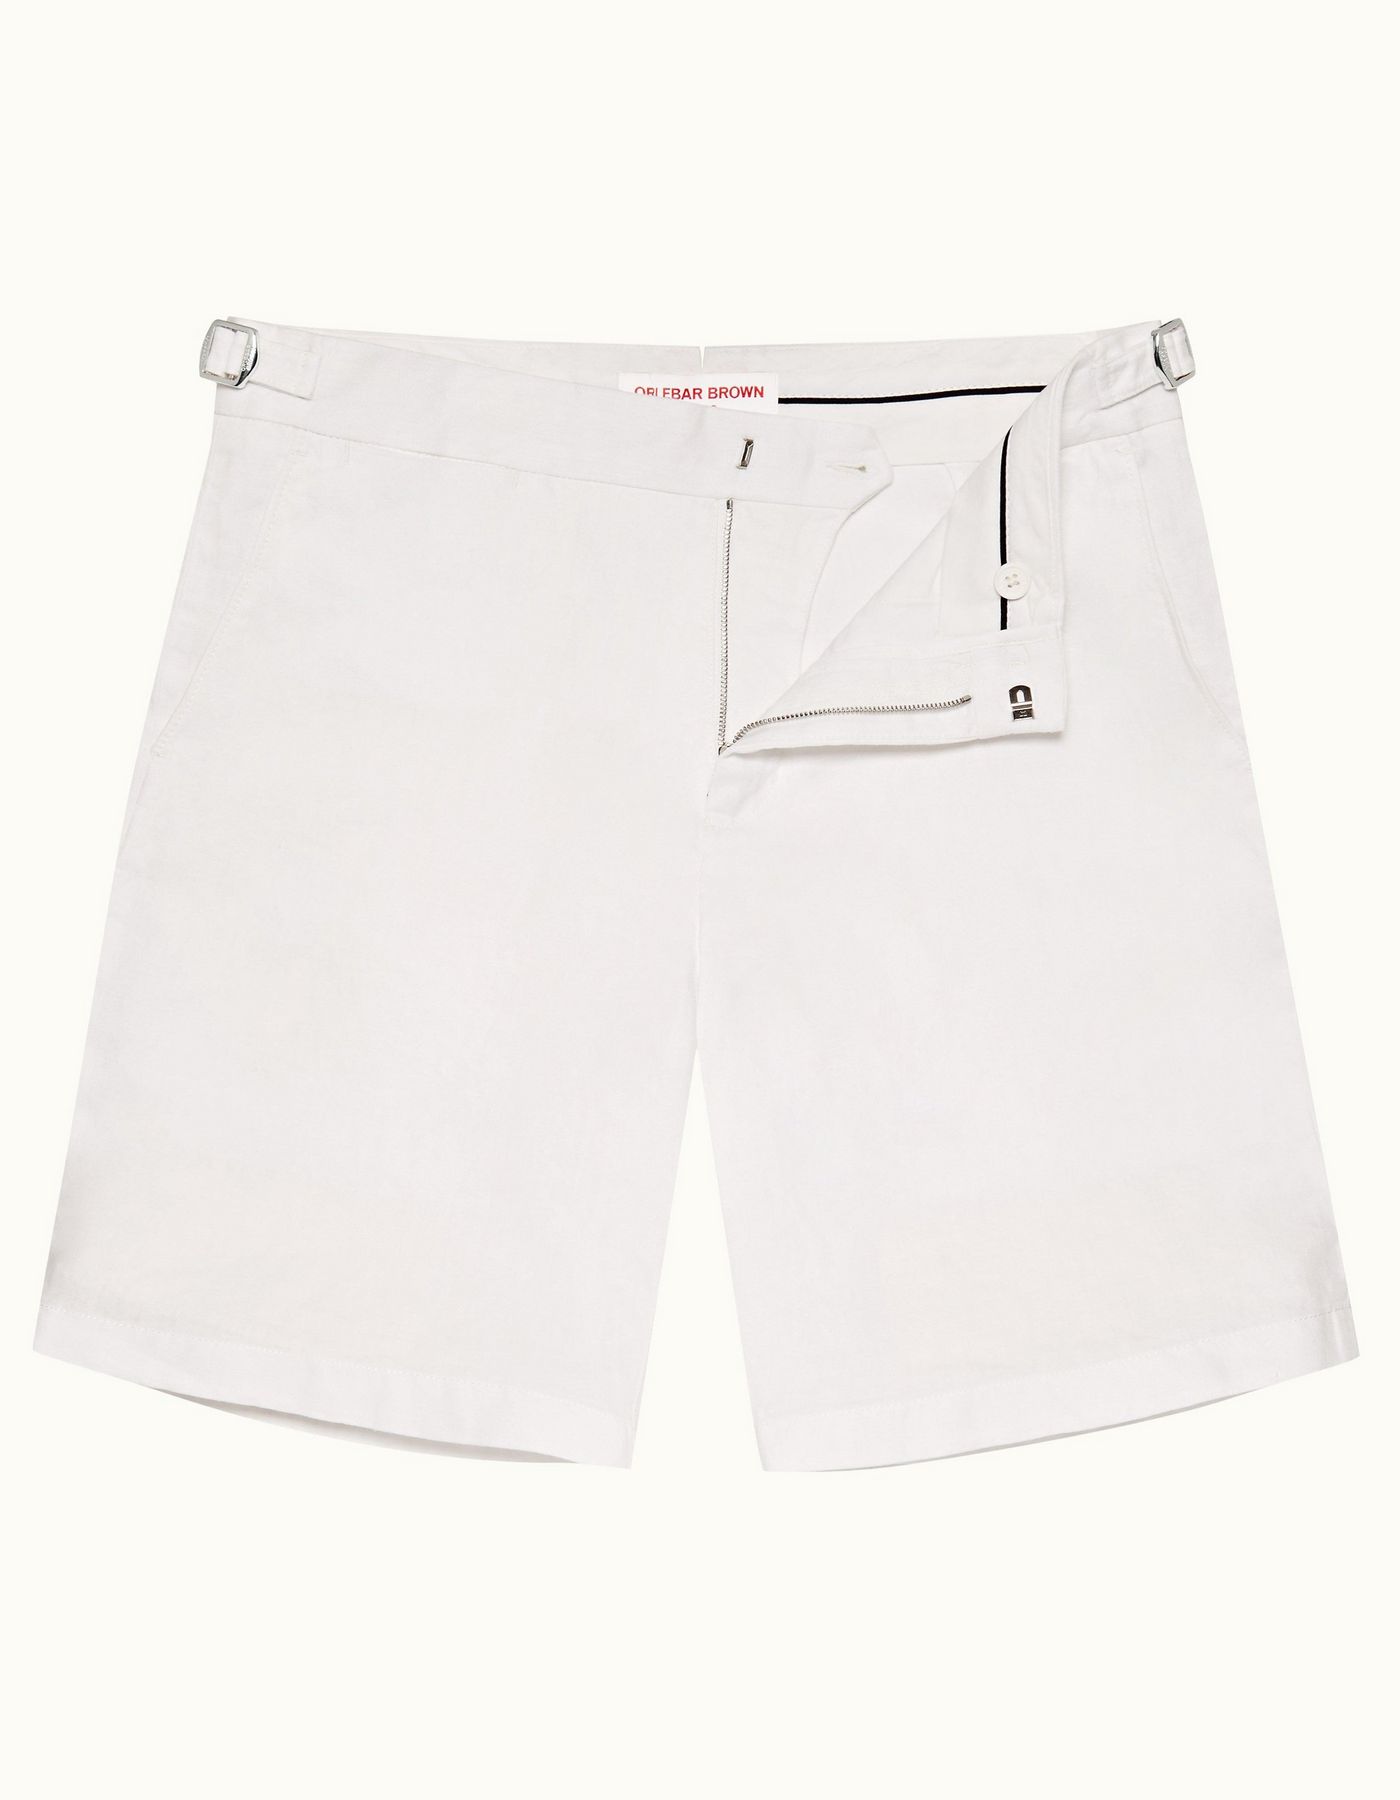 Norwich Linen - Mens Cloud Tailored Fit Linen Blend Shorts